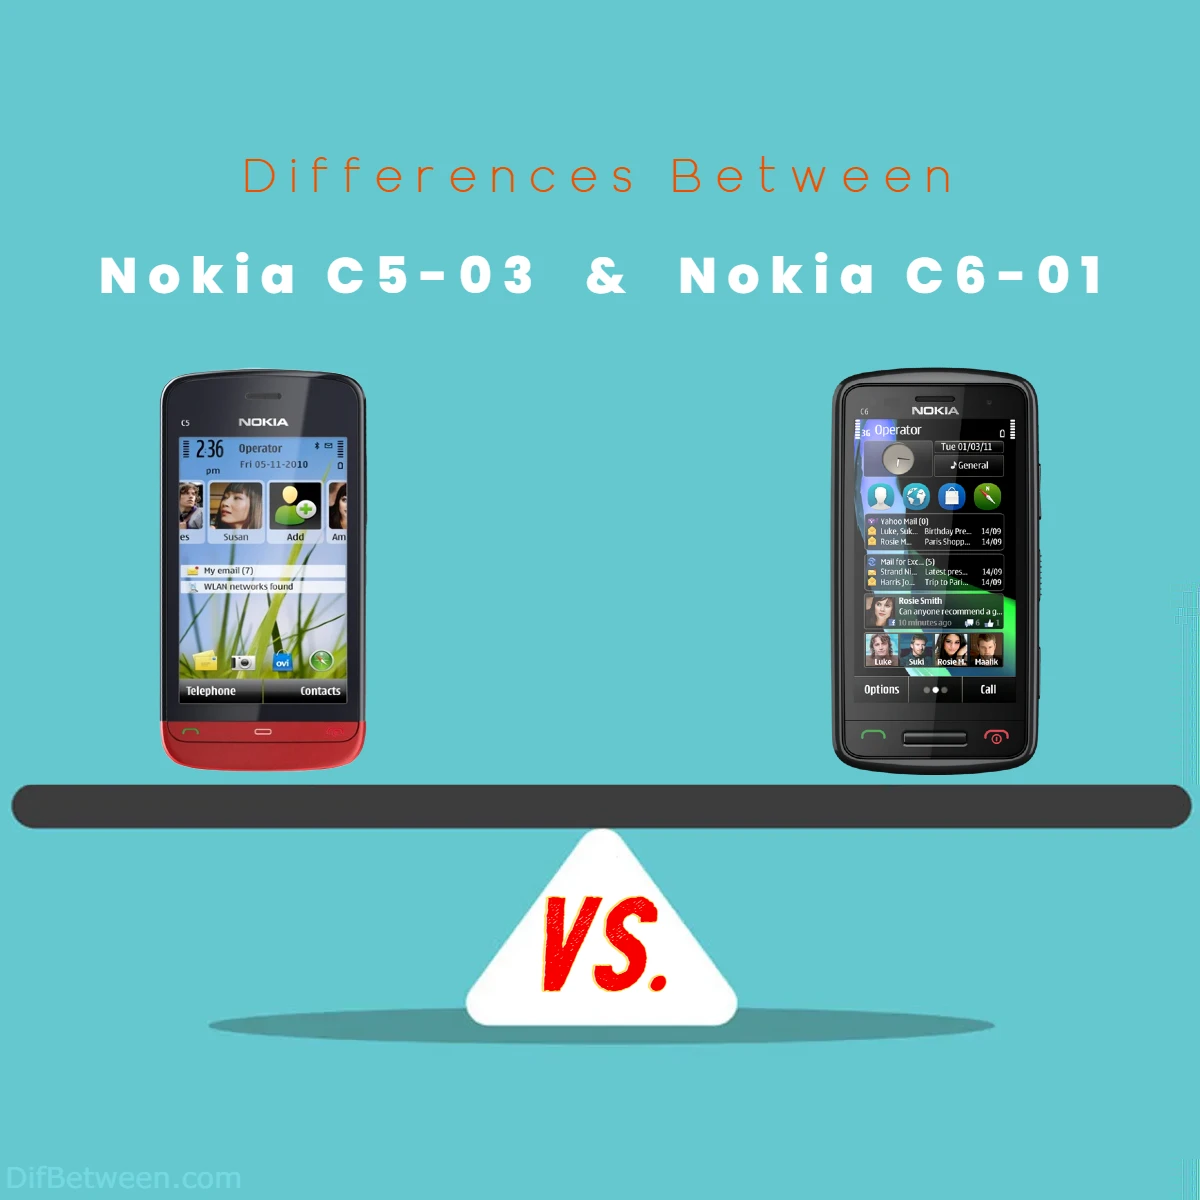 Differences Between Nokia C5 03 vs Nokia C6 01